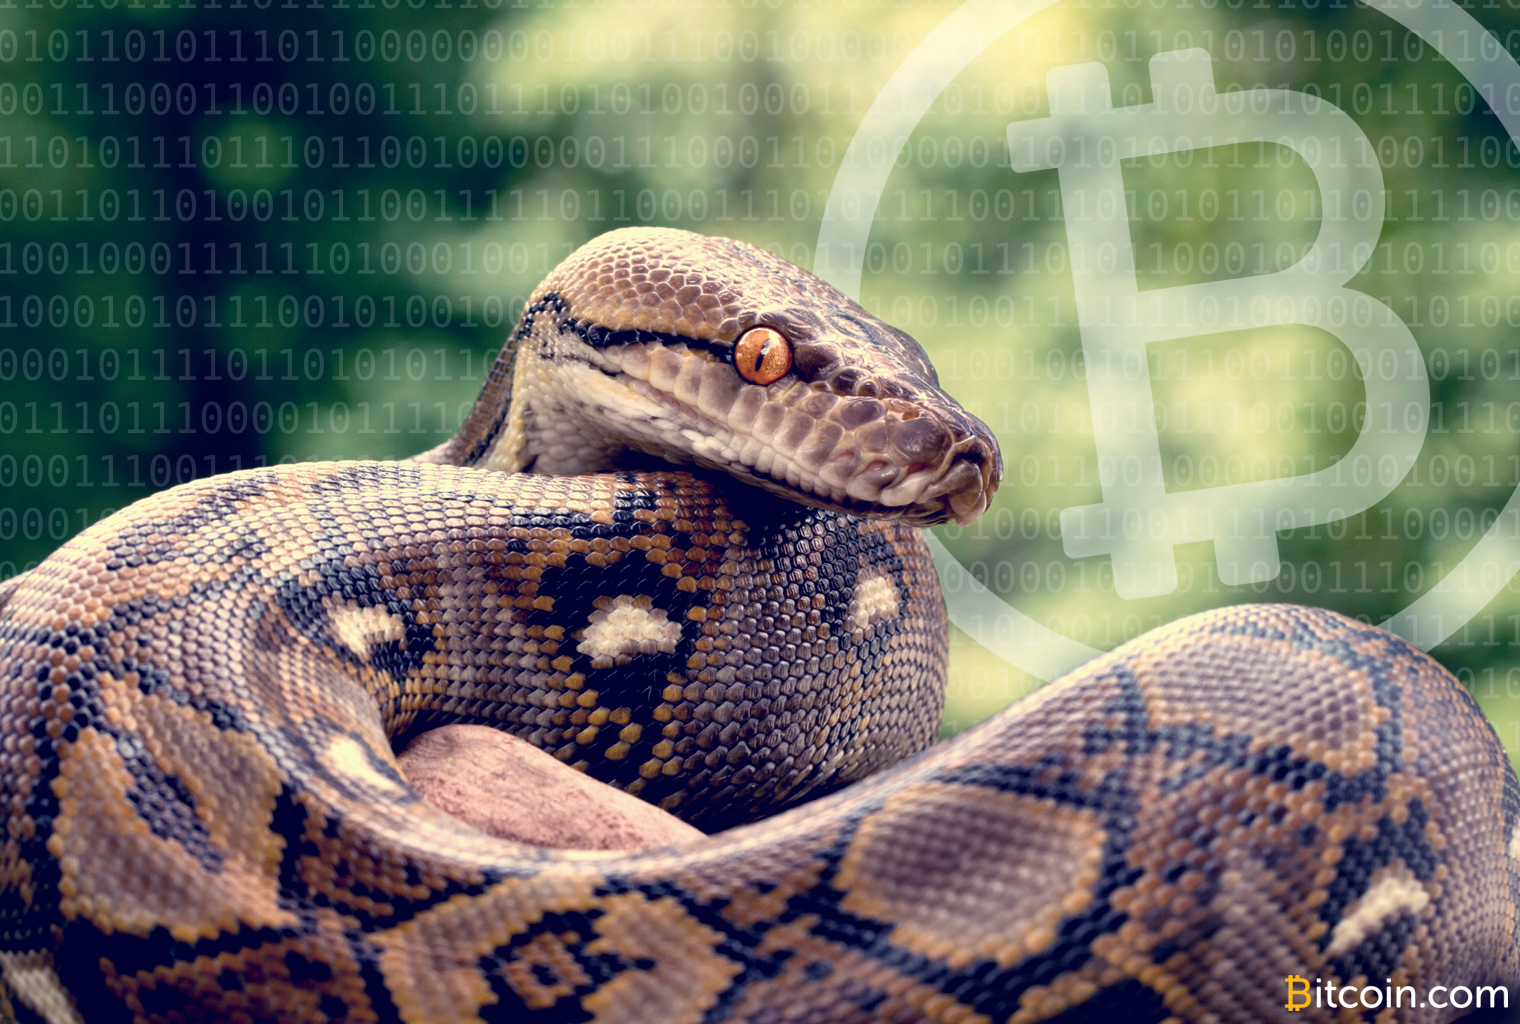 New Bitcoinpython Node Is 100X Faster Than Previous Python Libraries